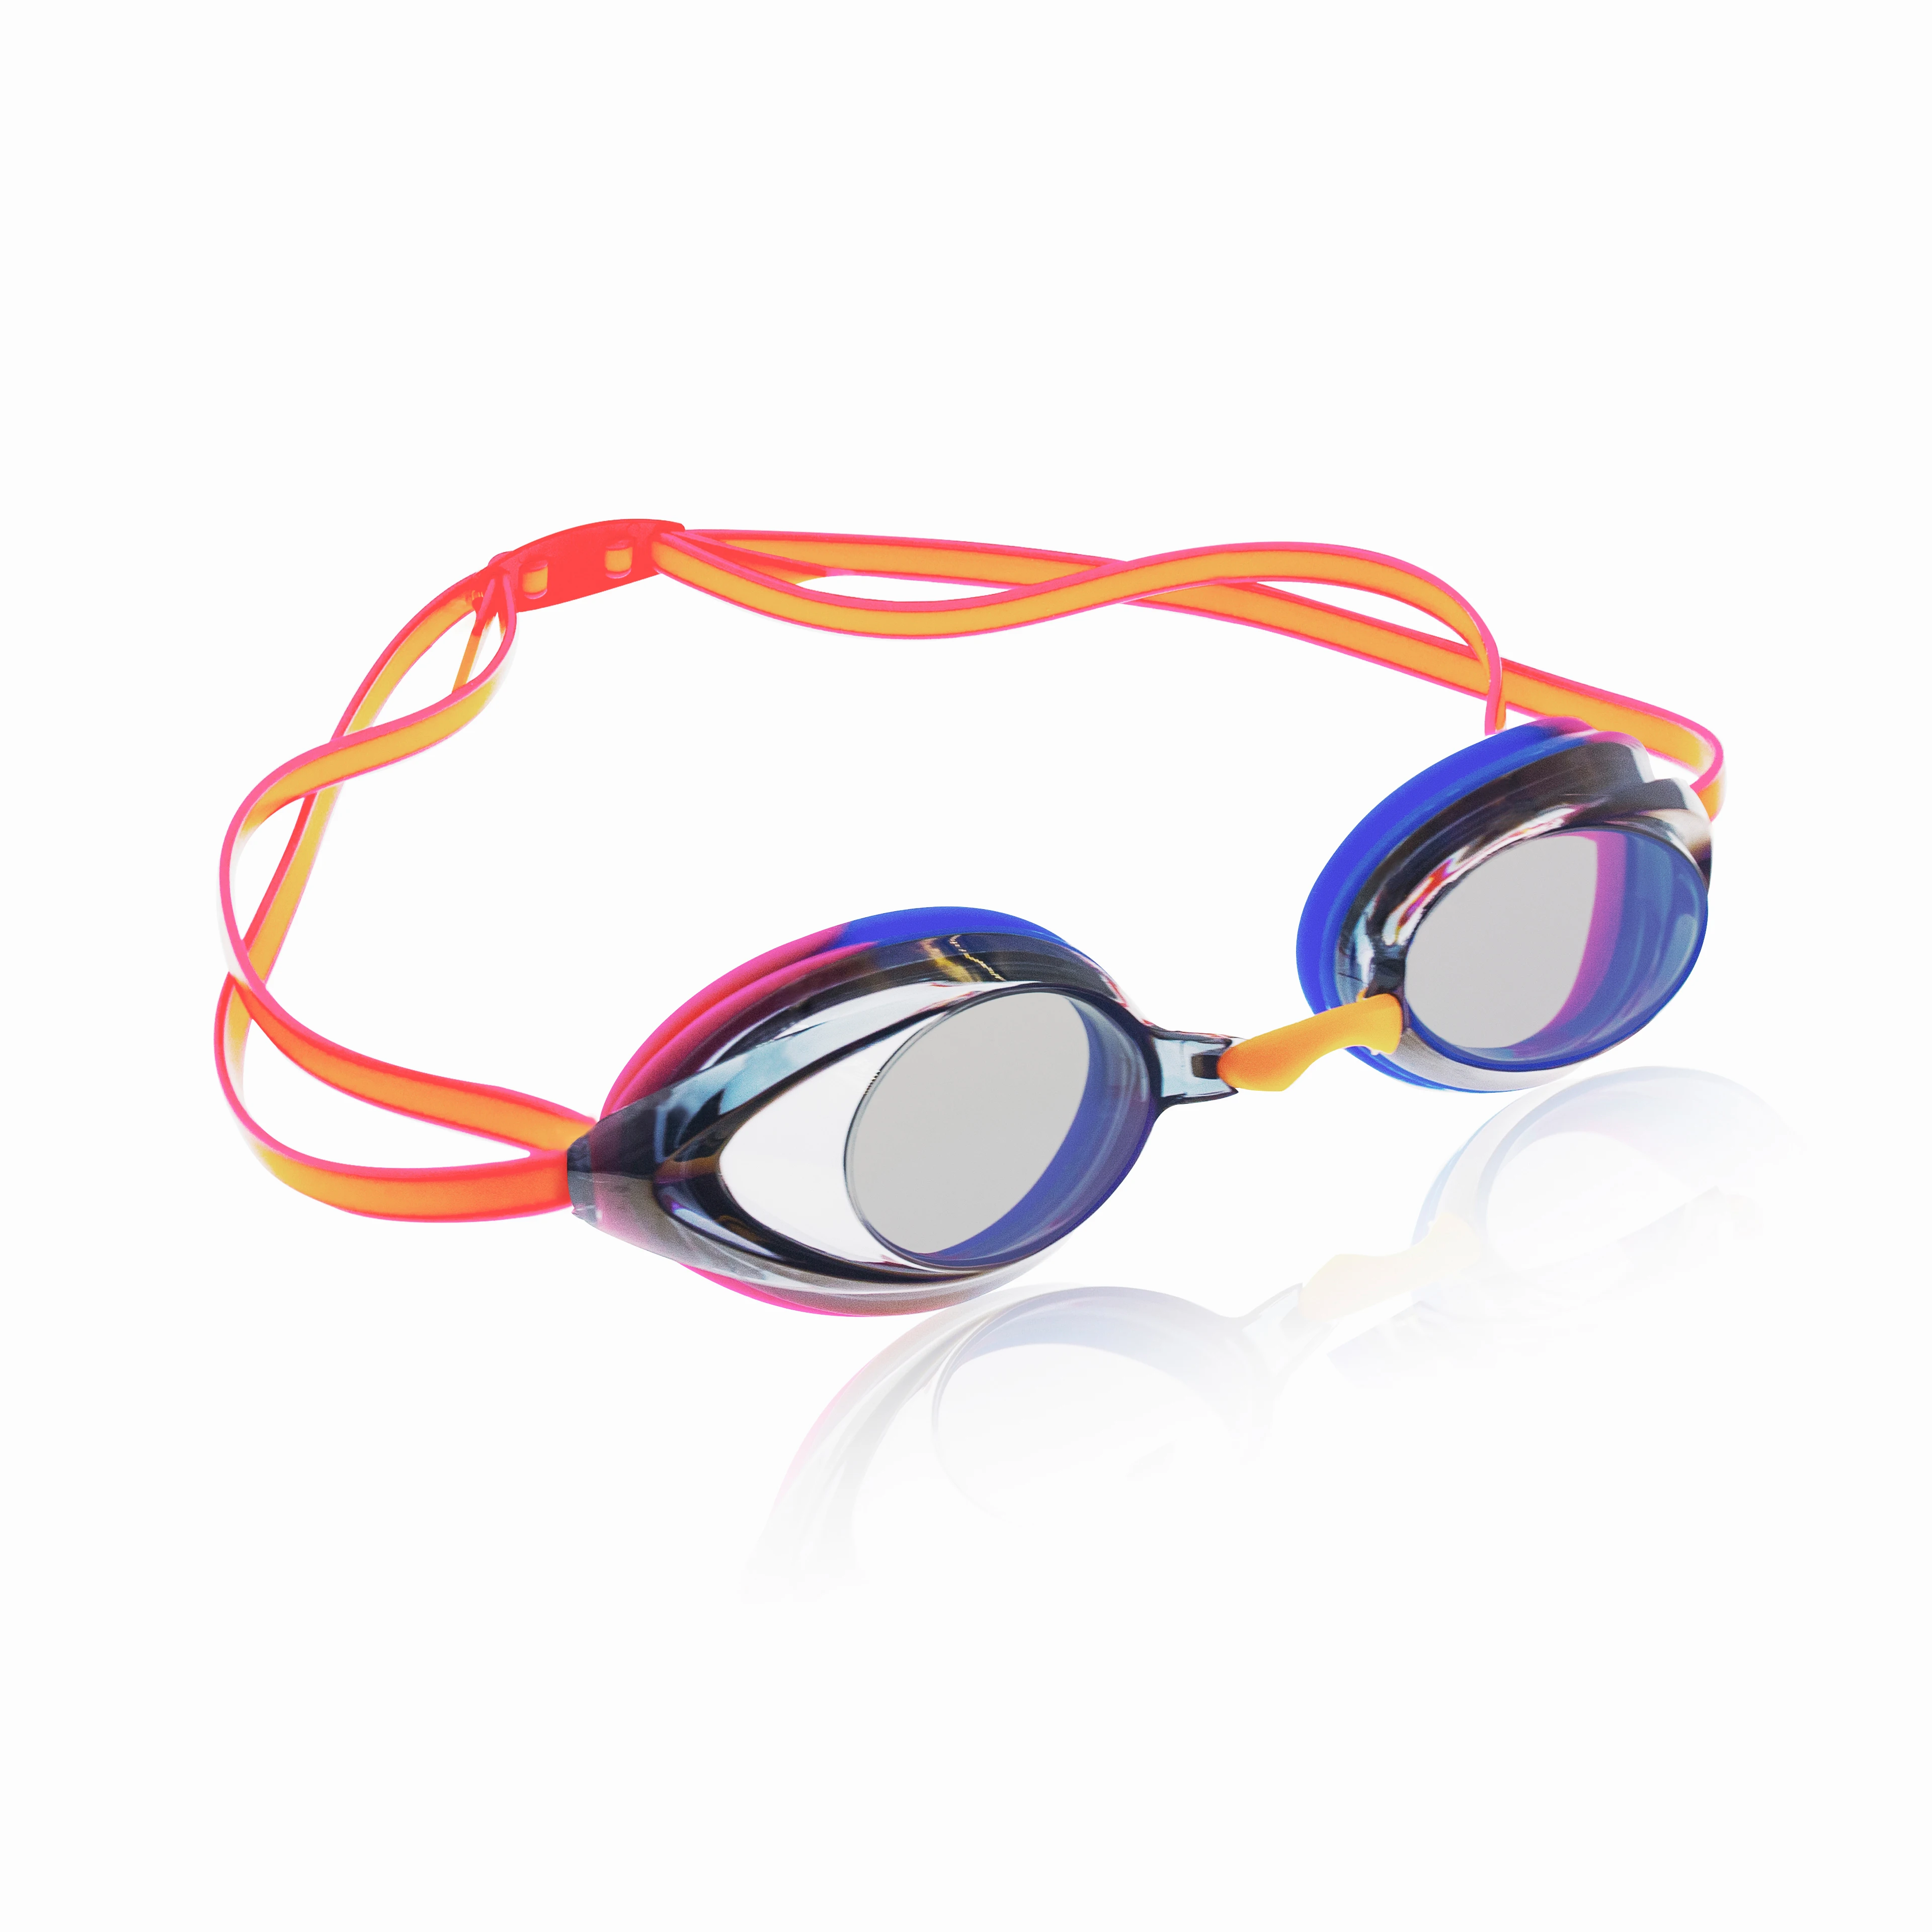 

ZLF Match Swimming Goggles PC Anti-fog sport new-arrival UV400 Silicone Manufacture Racing swimming glasses 1300, Picture color